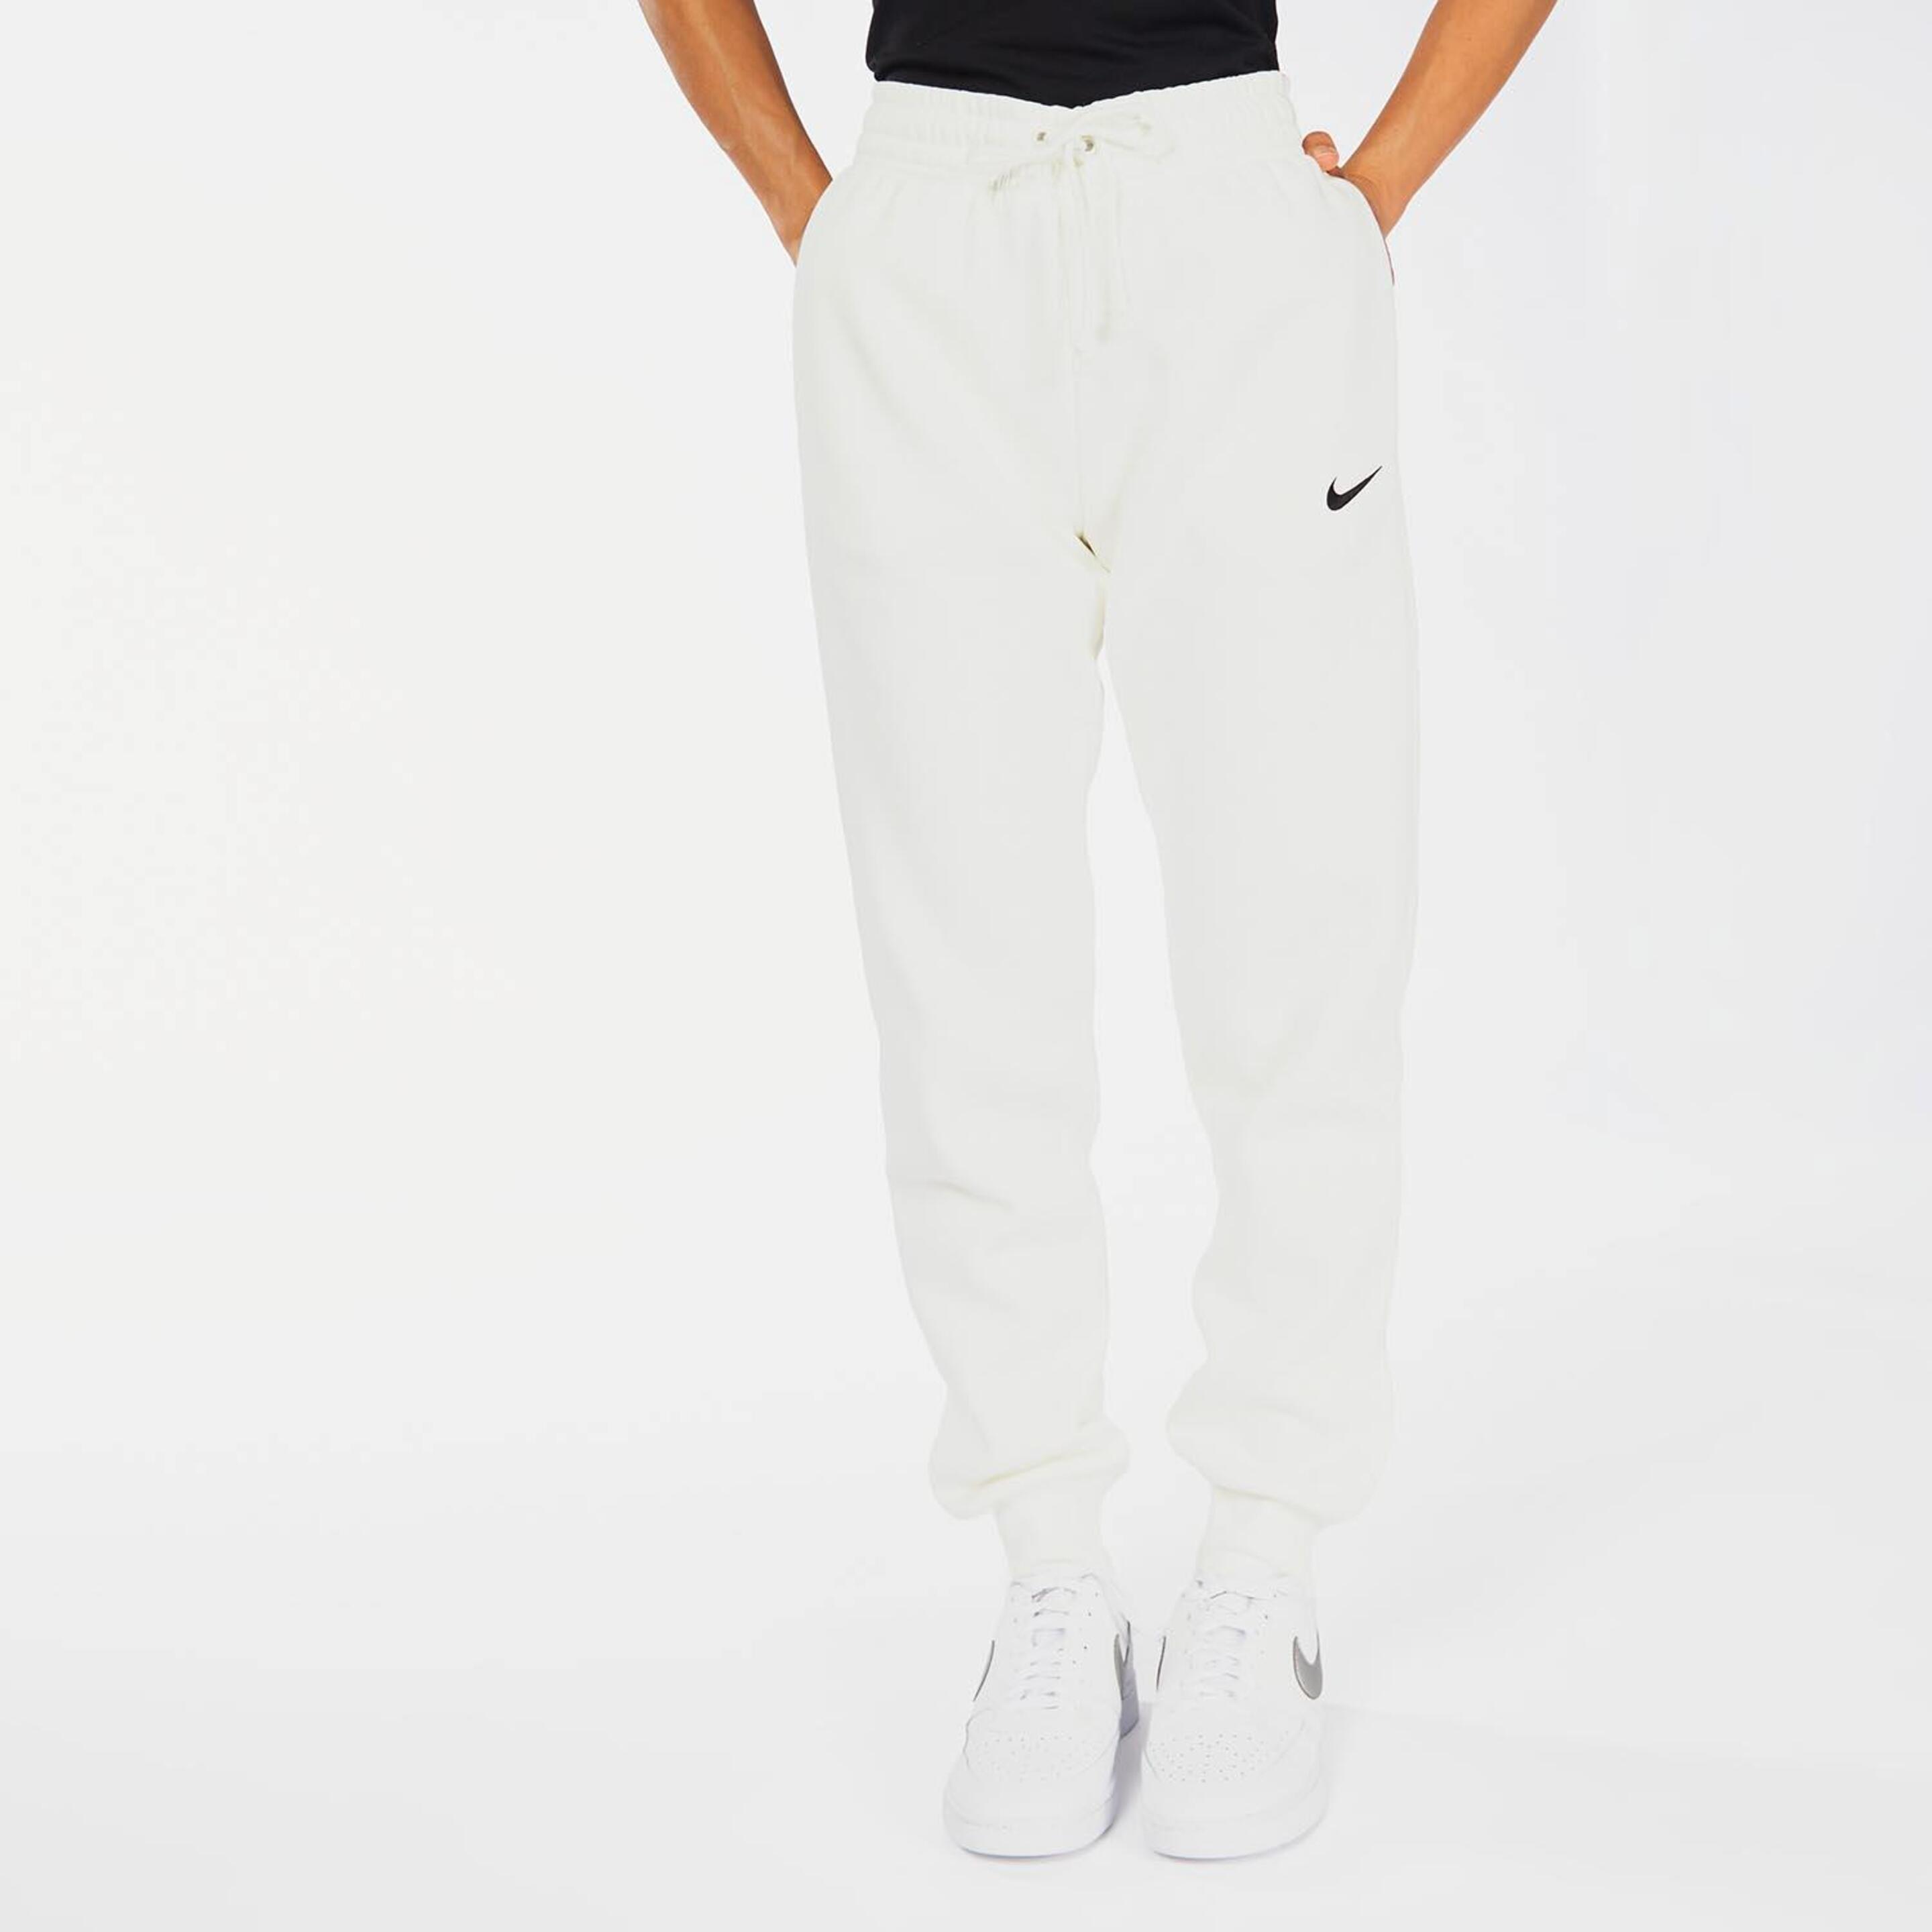 Nike Phoenix - blanco - Pantalón Puño Mujer